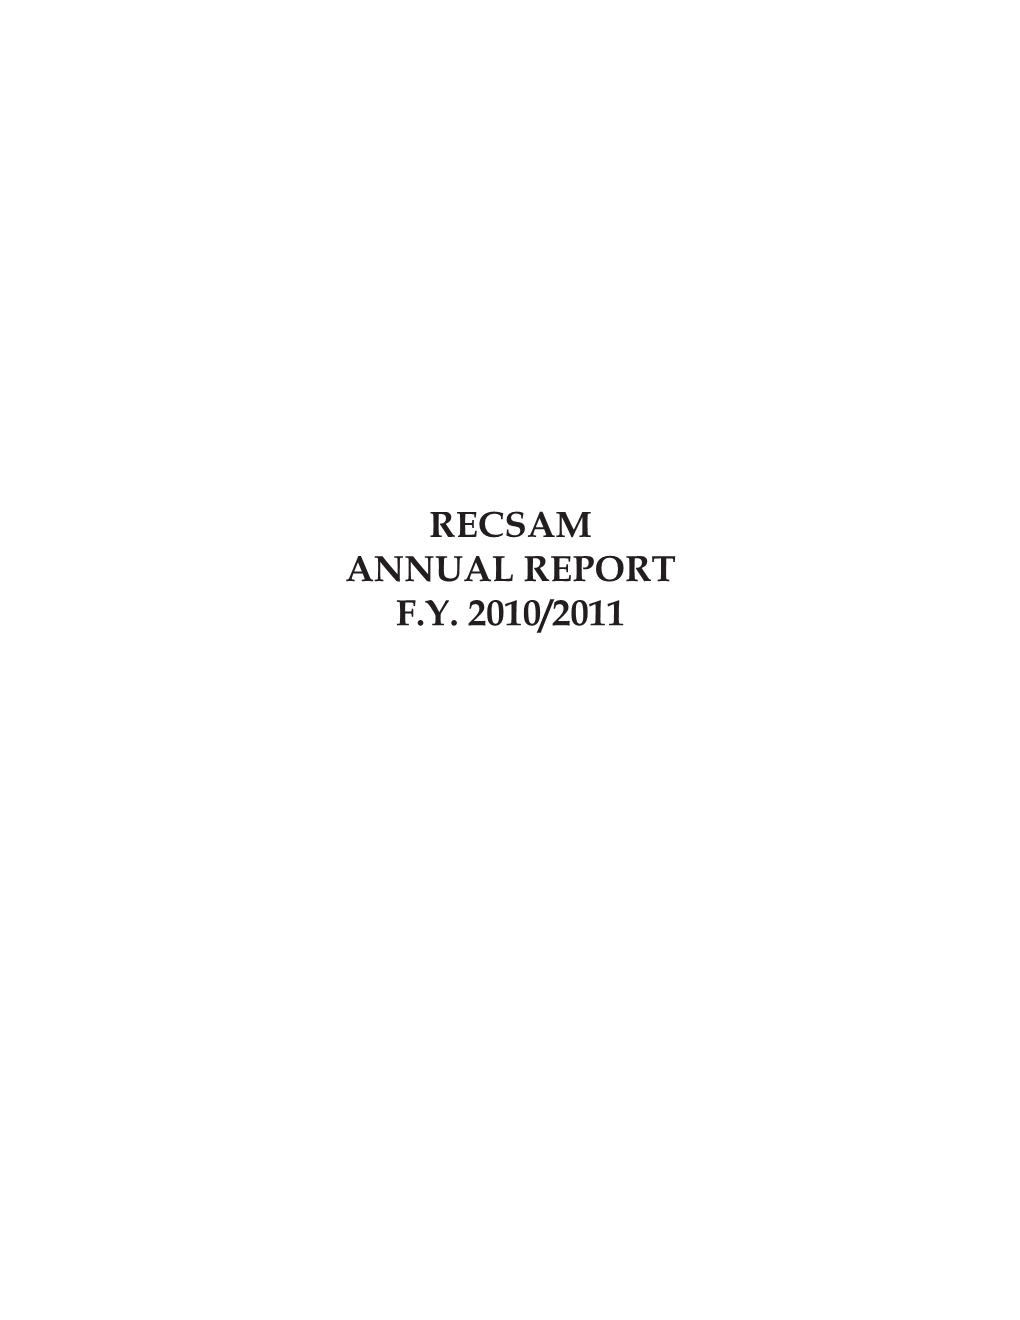 Recsam Annual Report F.Y. 2010/2011